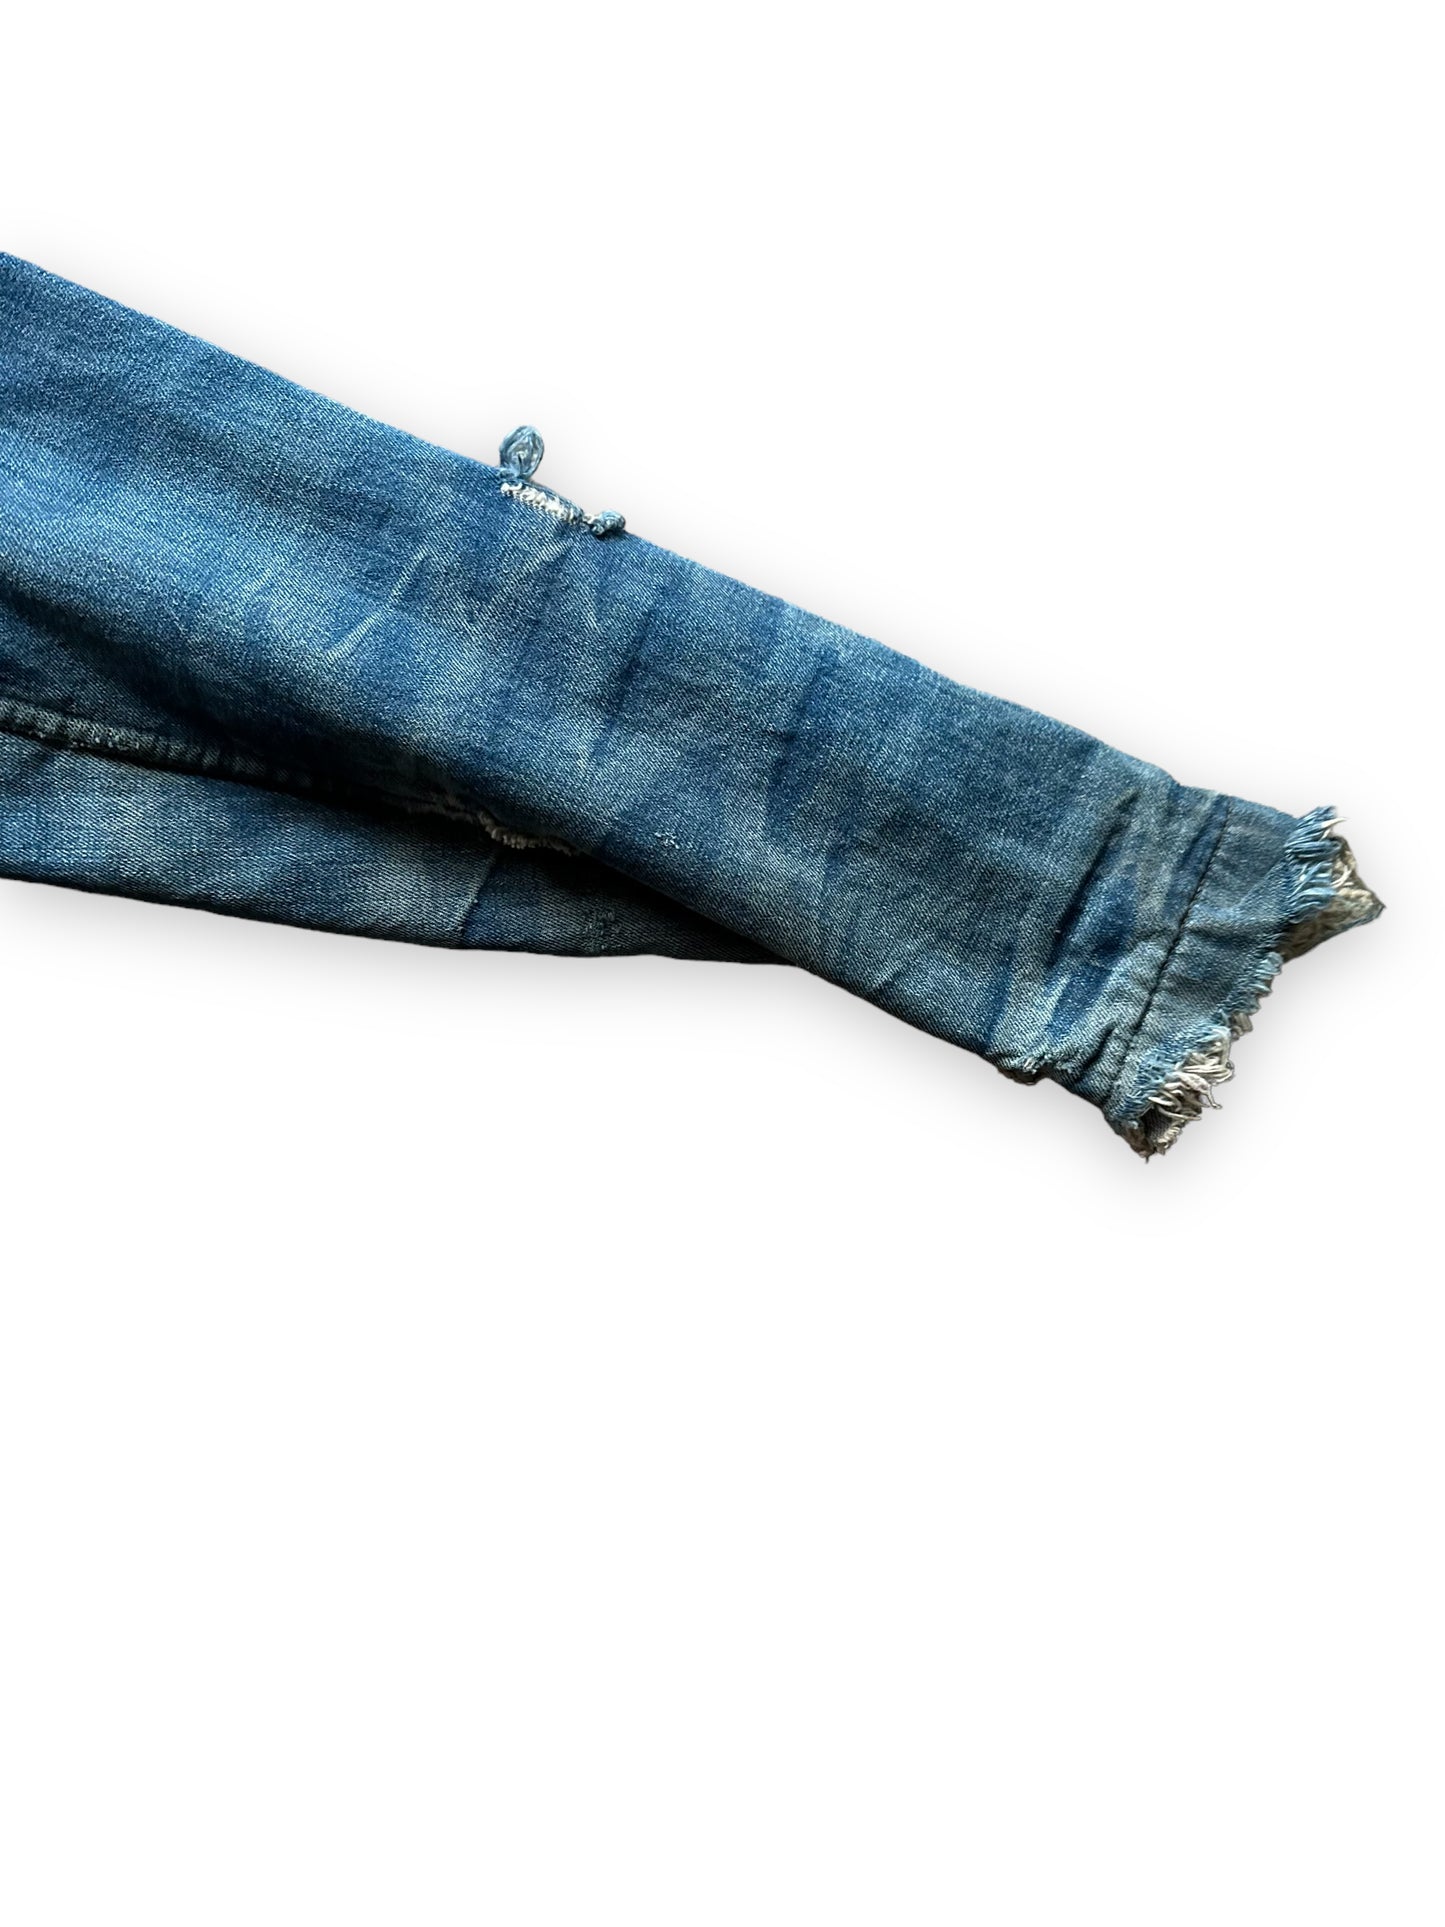 Left Sleeve Detail View on Vintage Blanket Lined Fitz Denim Jacket | Seattle Vintage Workwear Clothing | Barn Owl Vintage